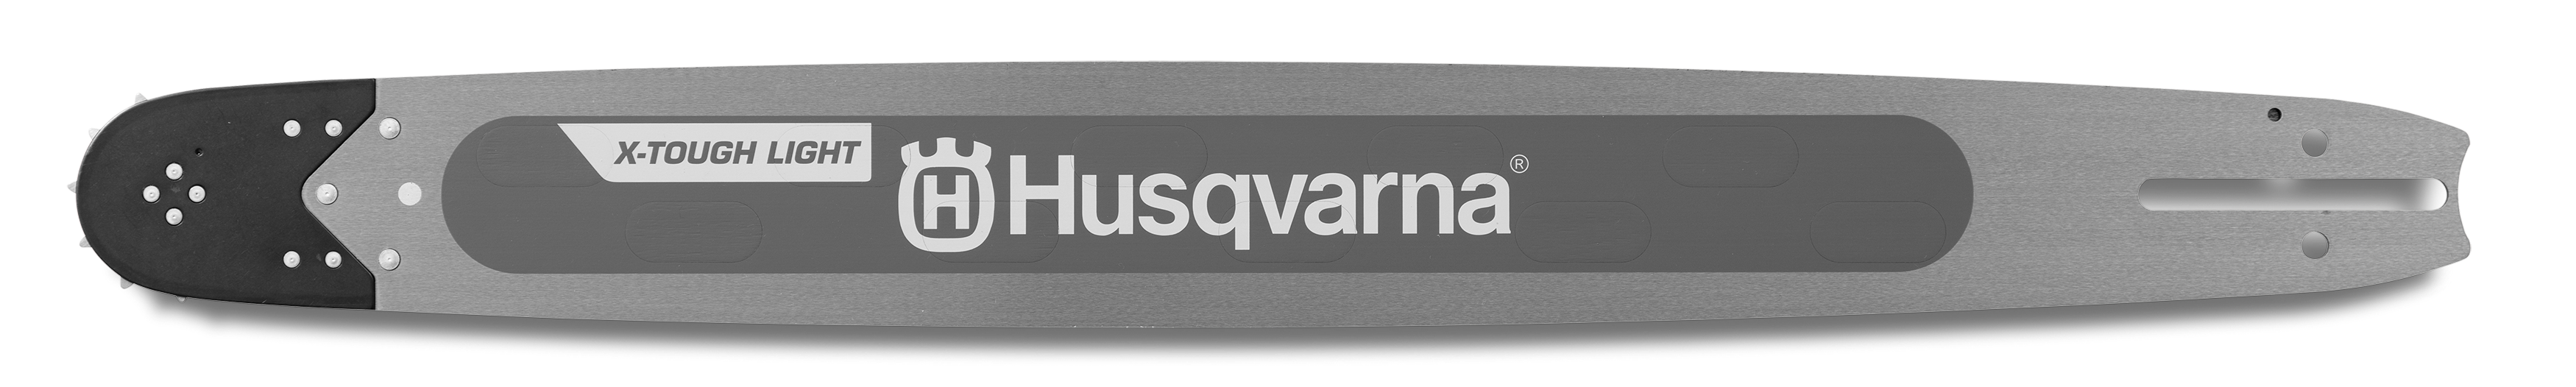 Husqvarna X-tough light terälevy 3/8" 1.5mm RSN iso sovite 28"